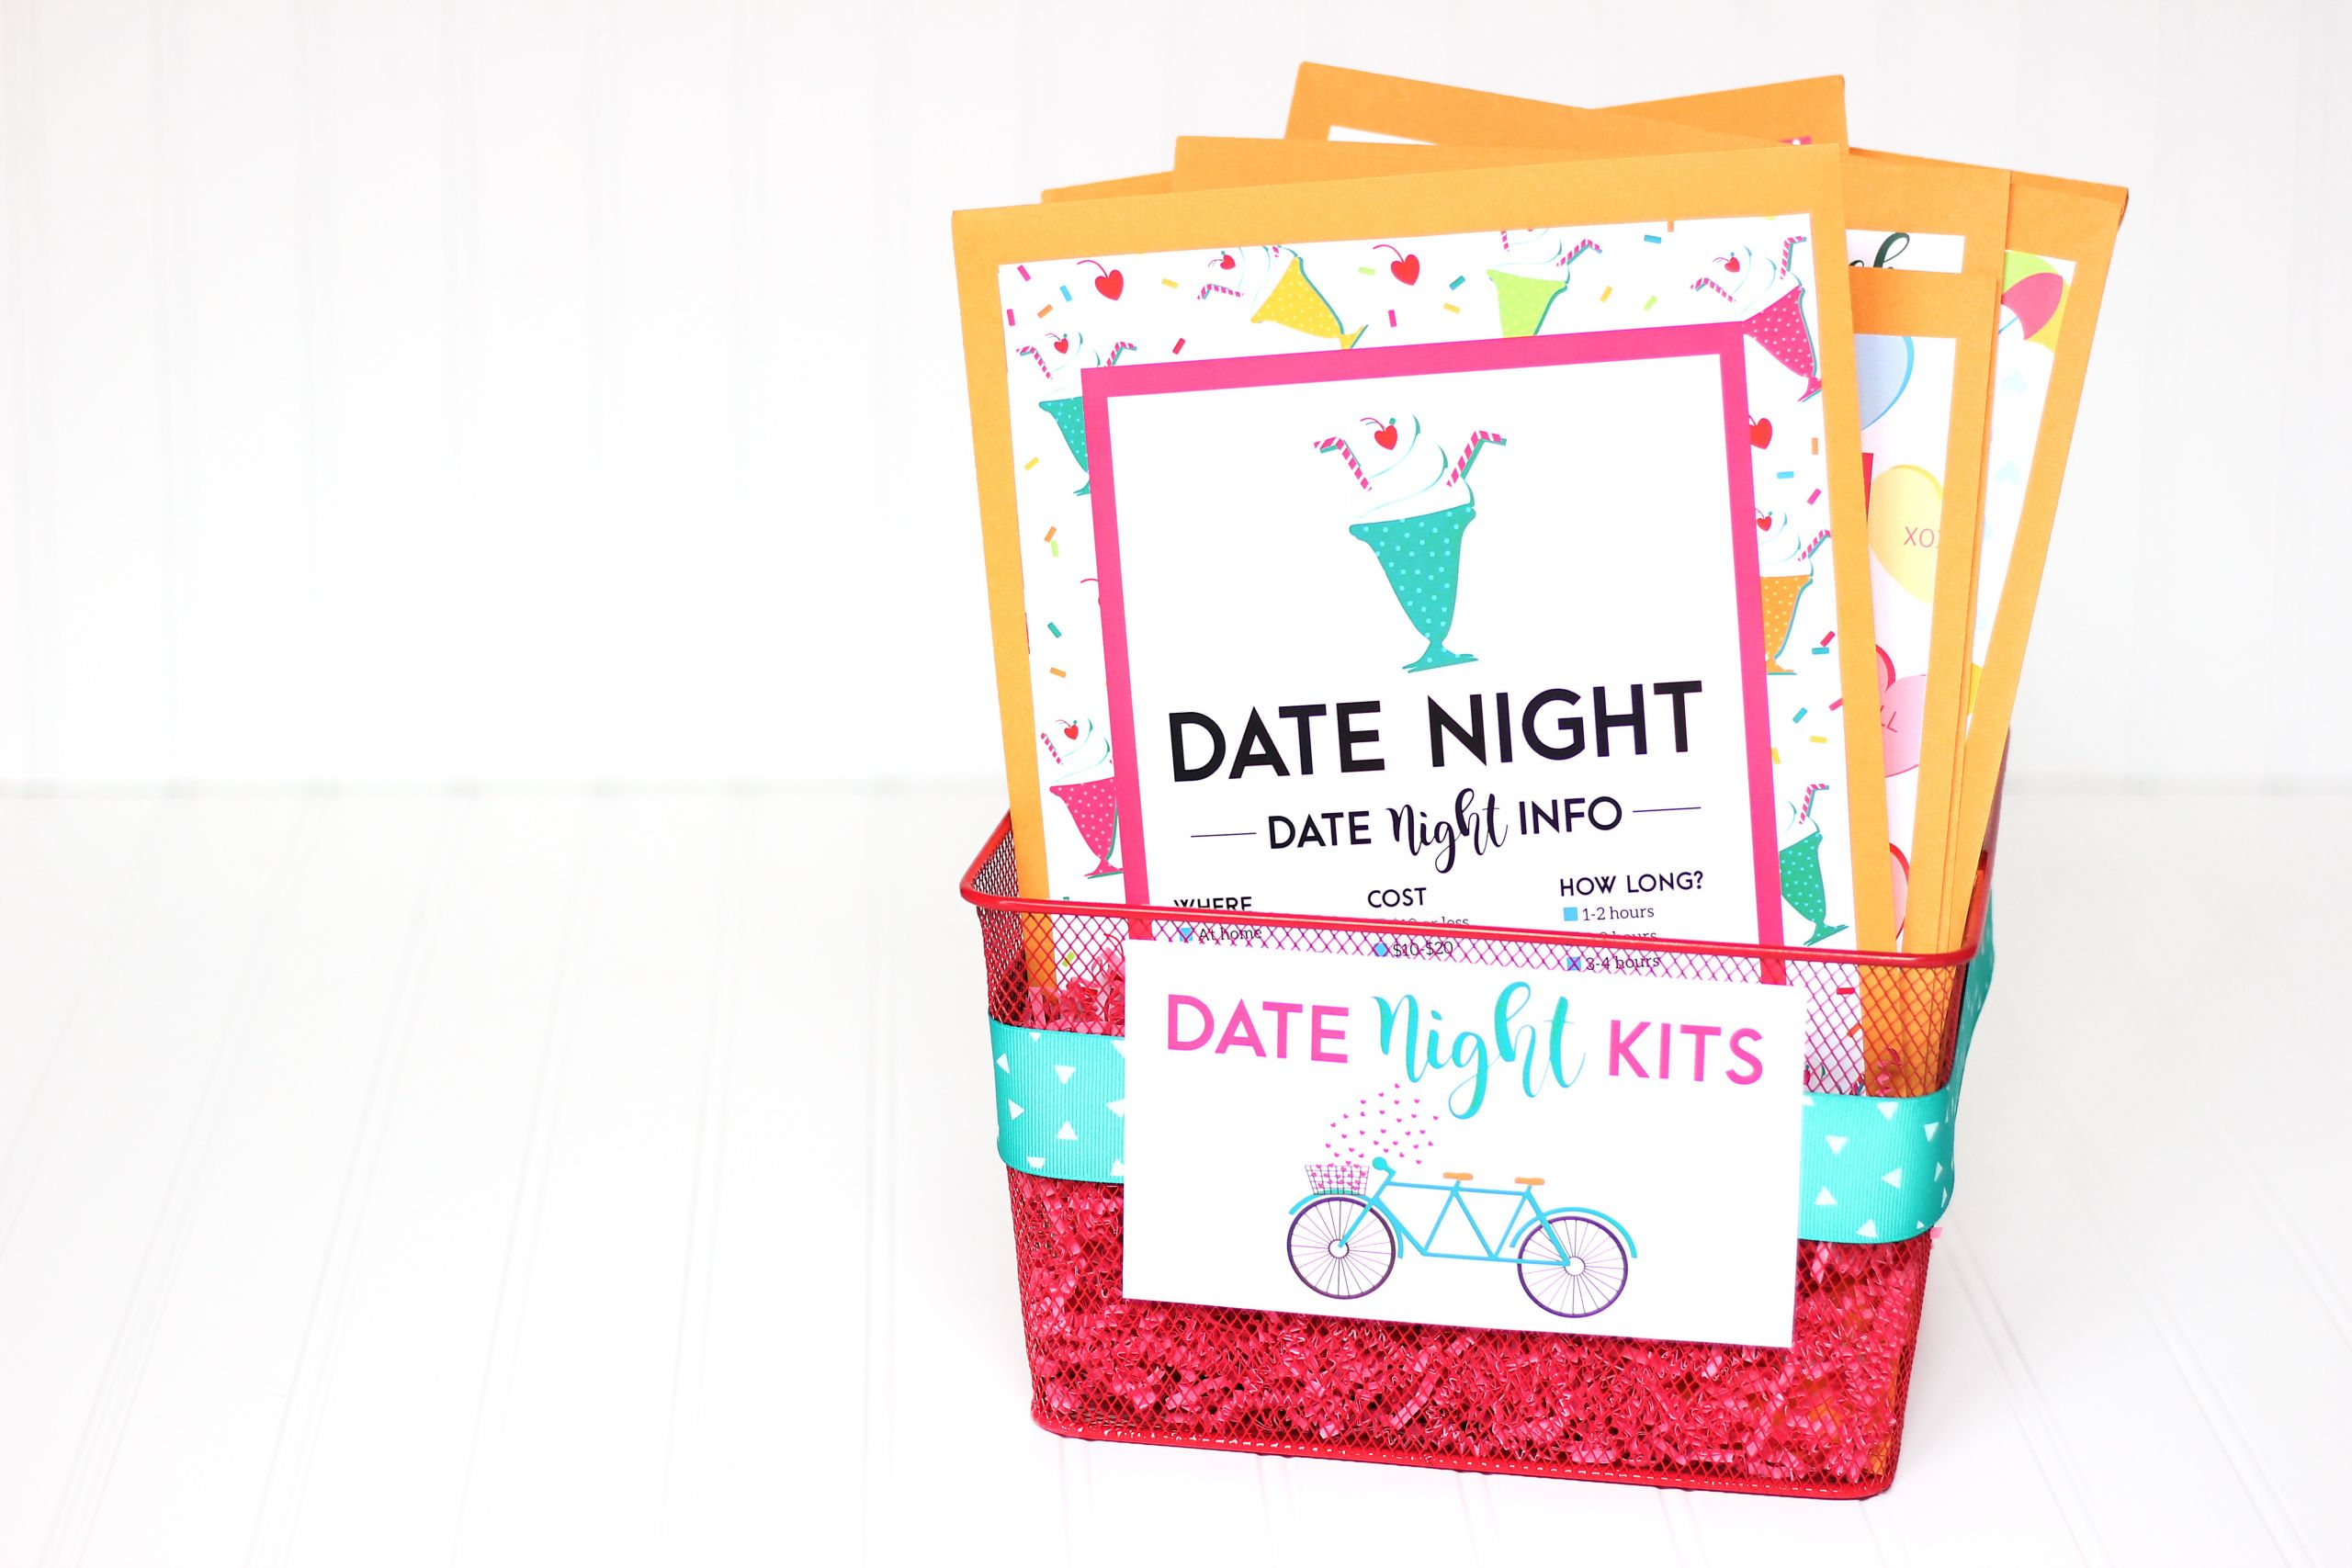 Creative Bridal Shower Gift Basket Ideas
 The Best Bridal Shower Gift Ideas from The Dating Divas